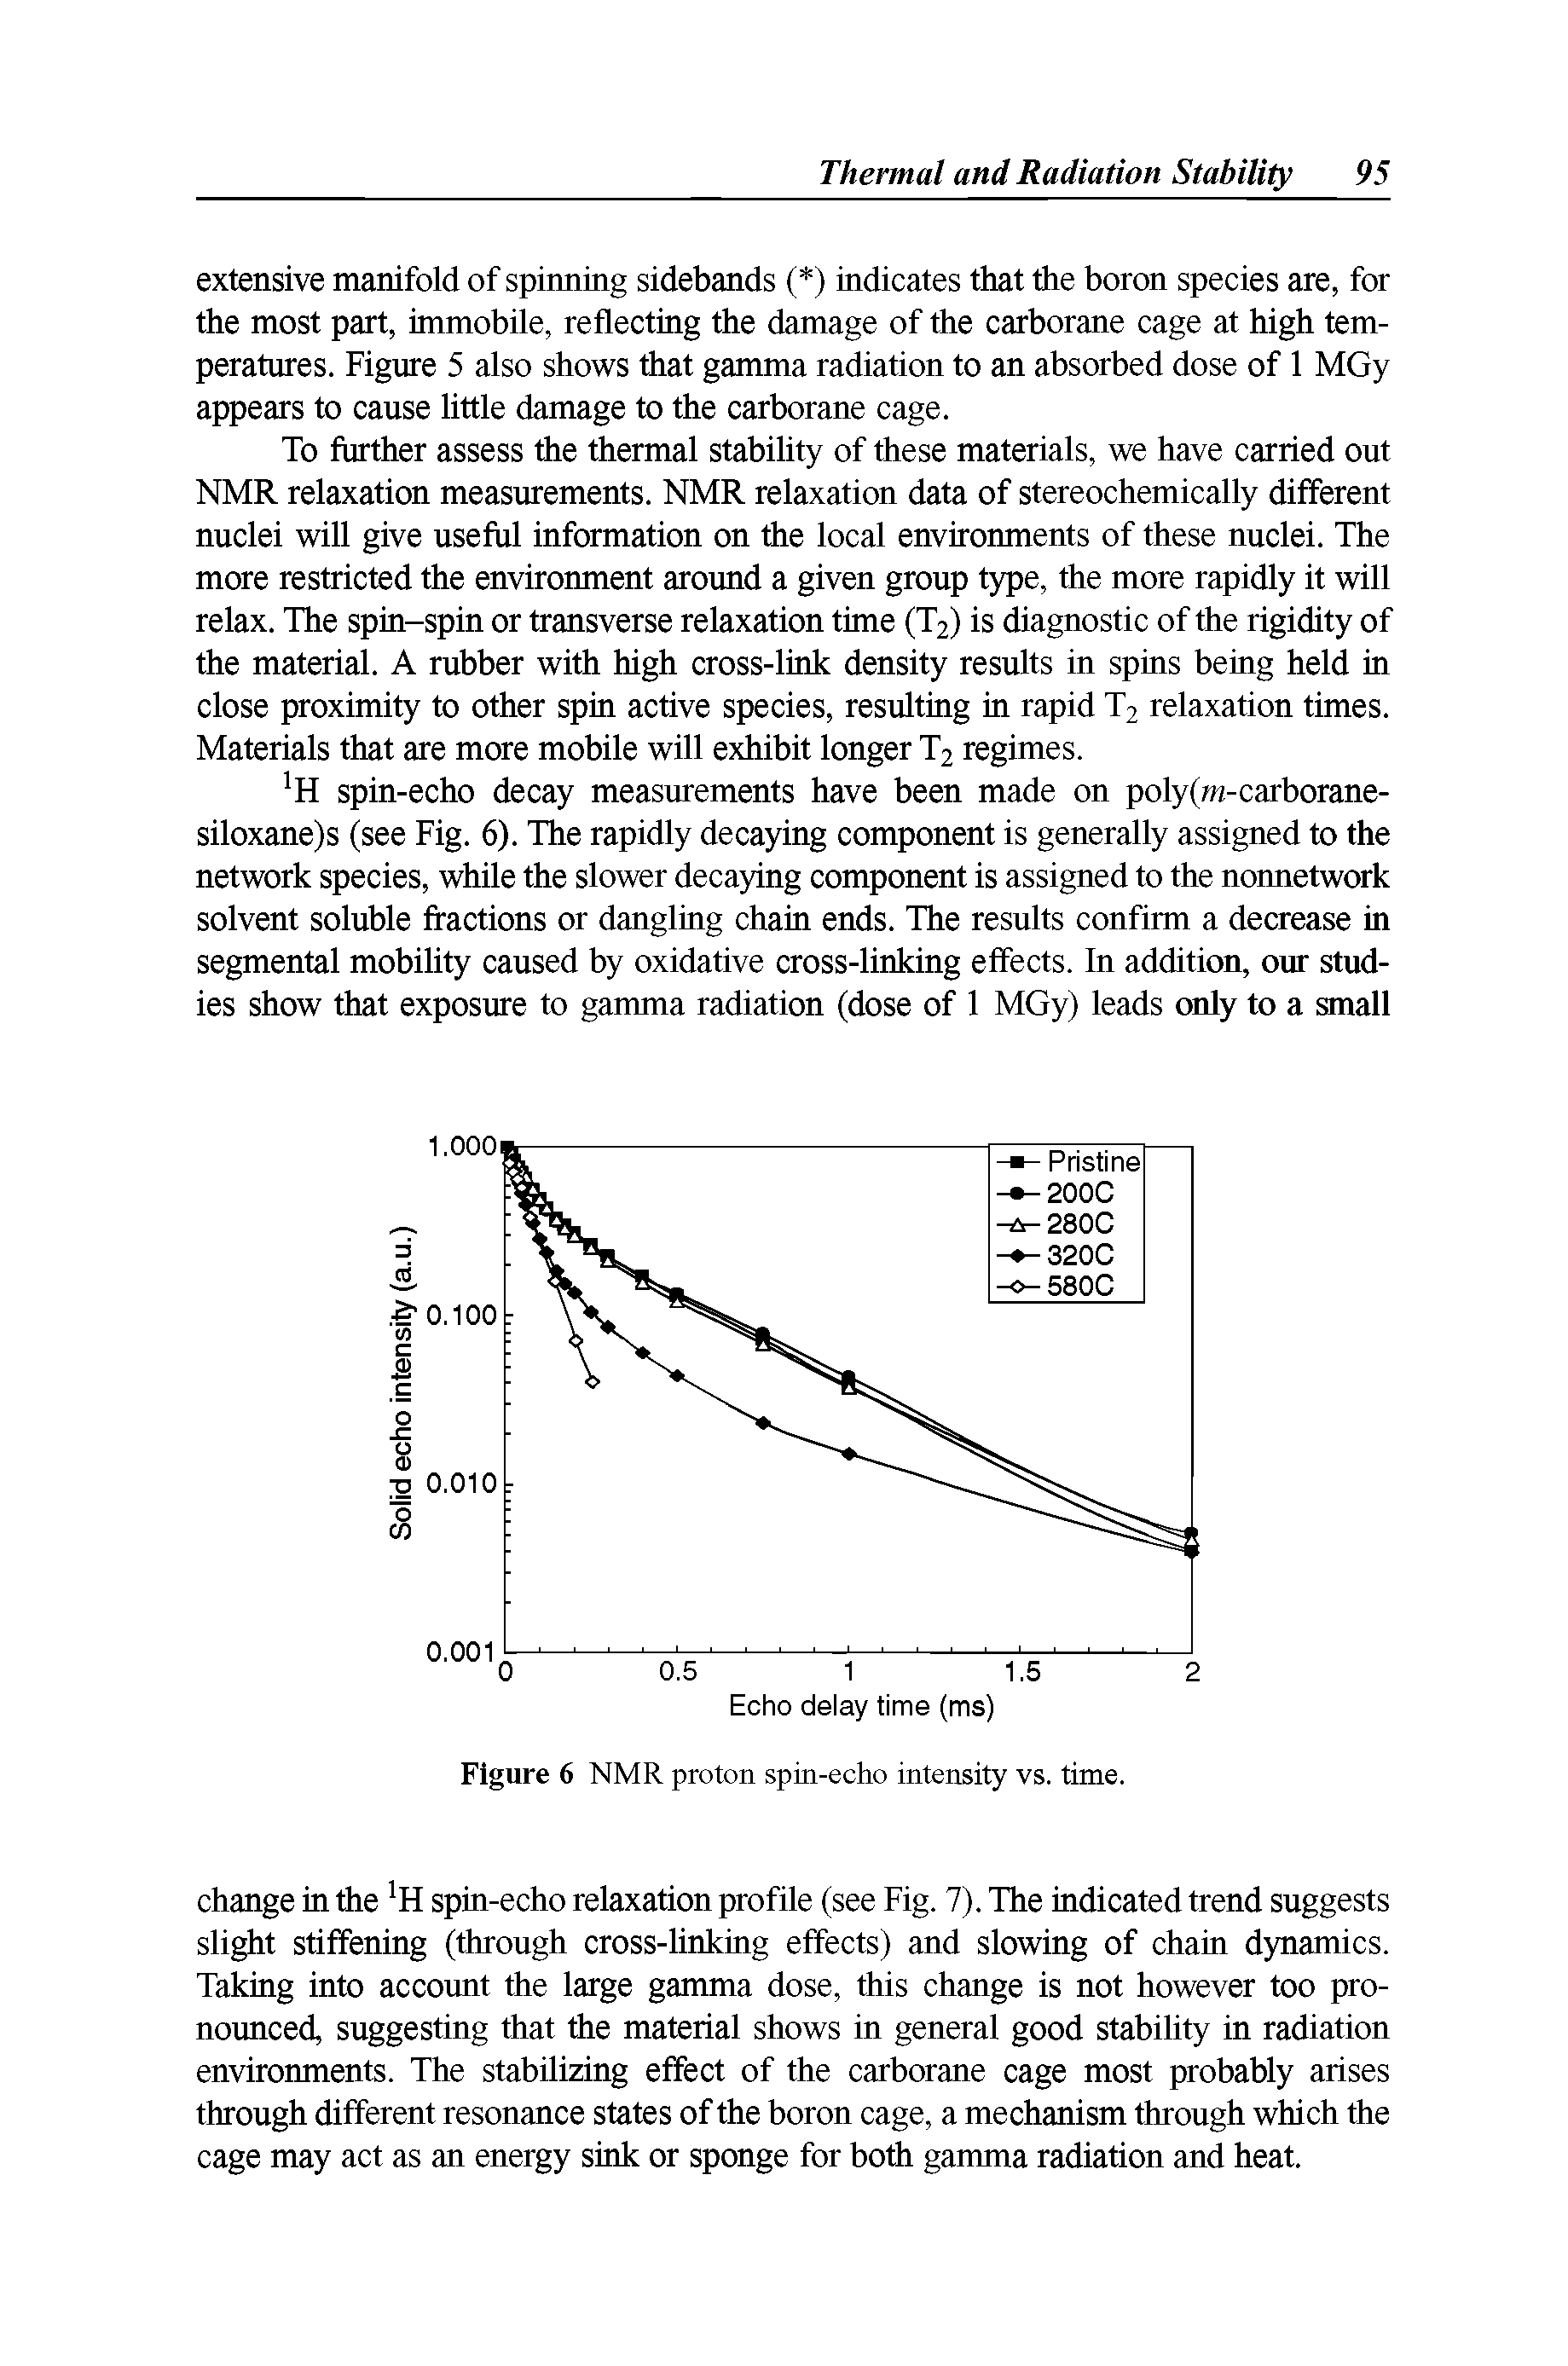 Figure 6 NMR proton spin-echo intensity vs. time.